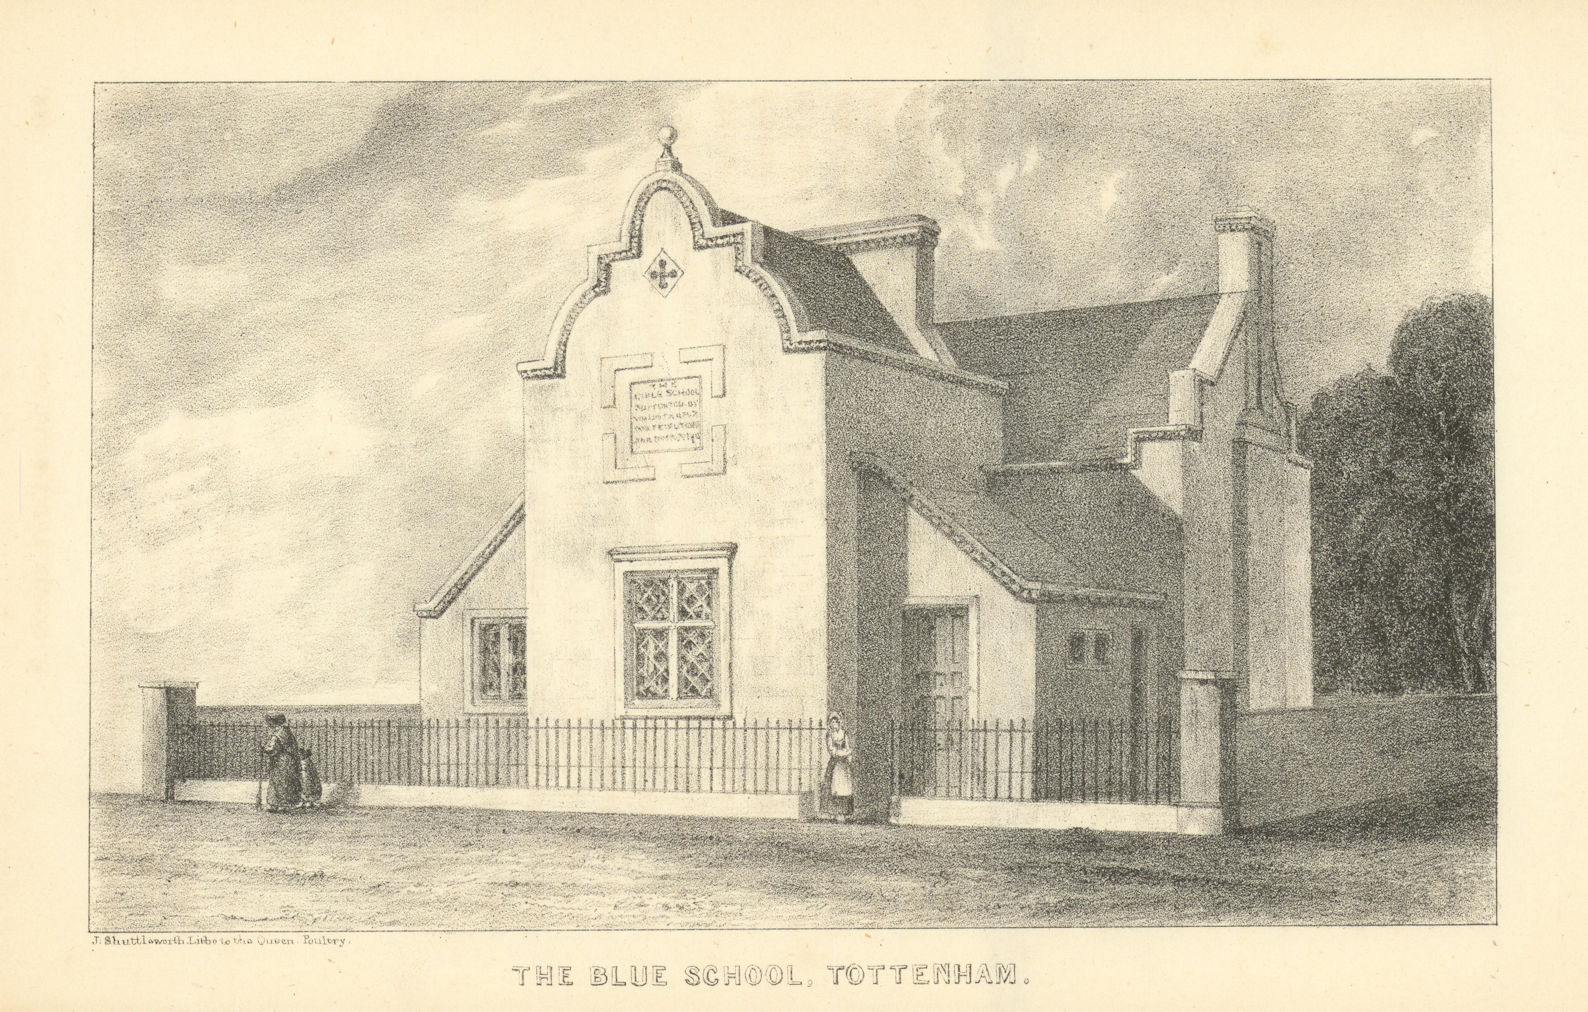 The Bluecoats School, Tottenham. Now the Bluecoats pub, 614 High Road 1840